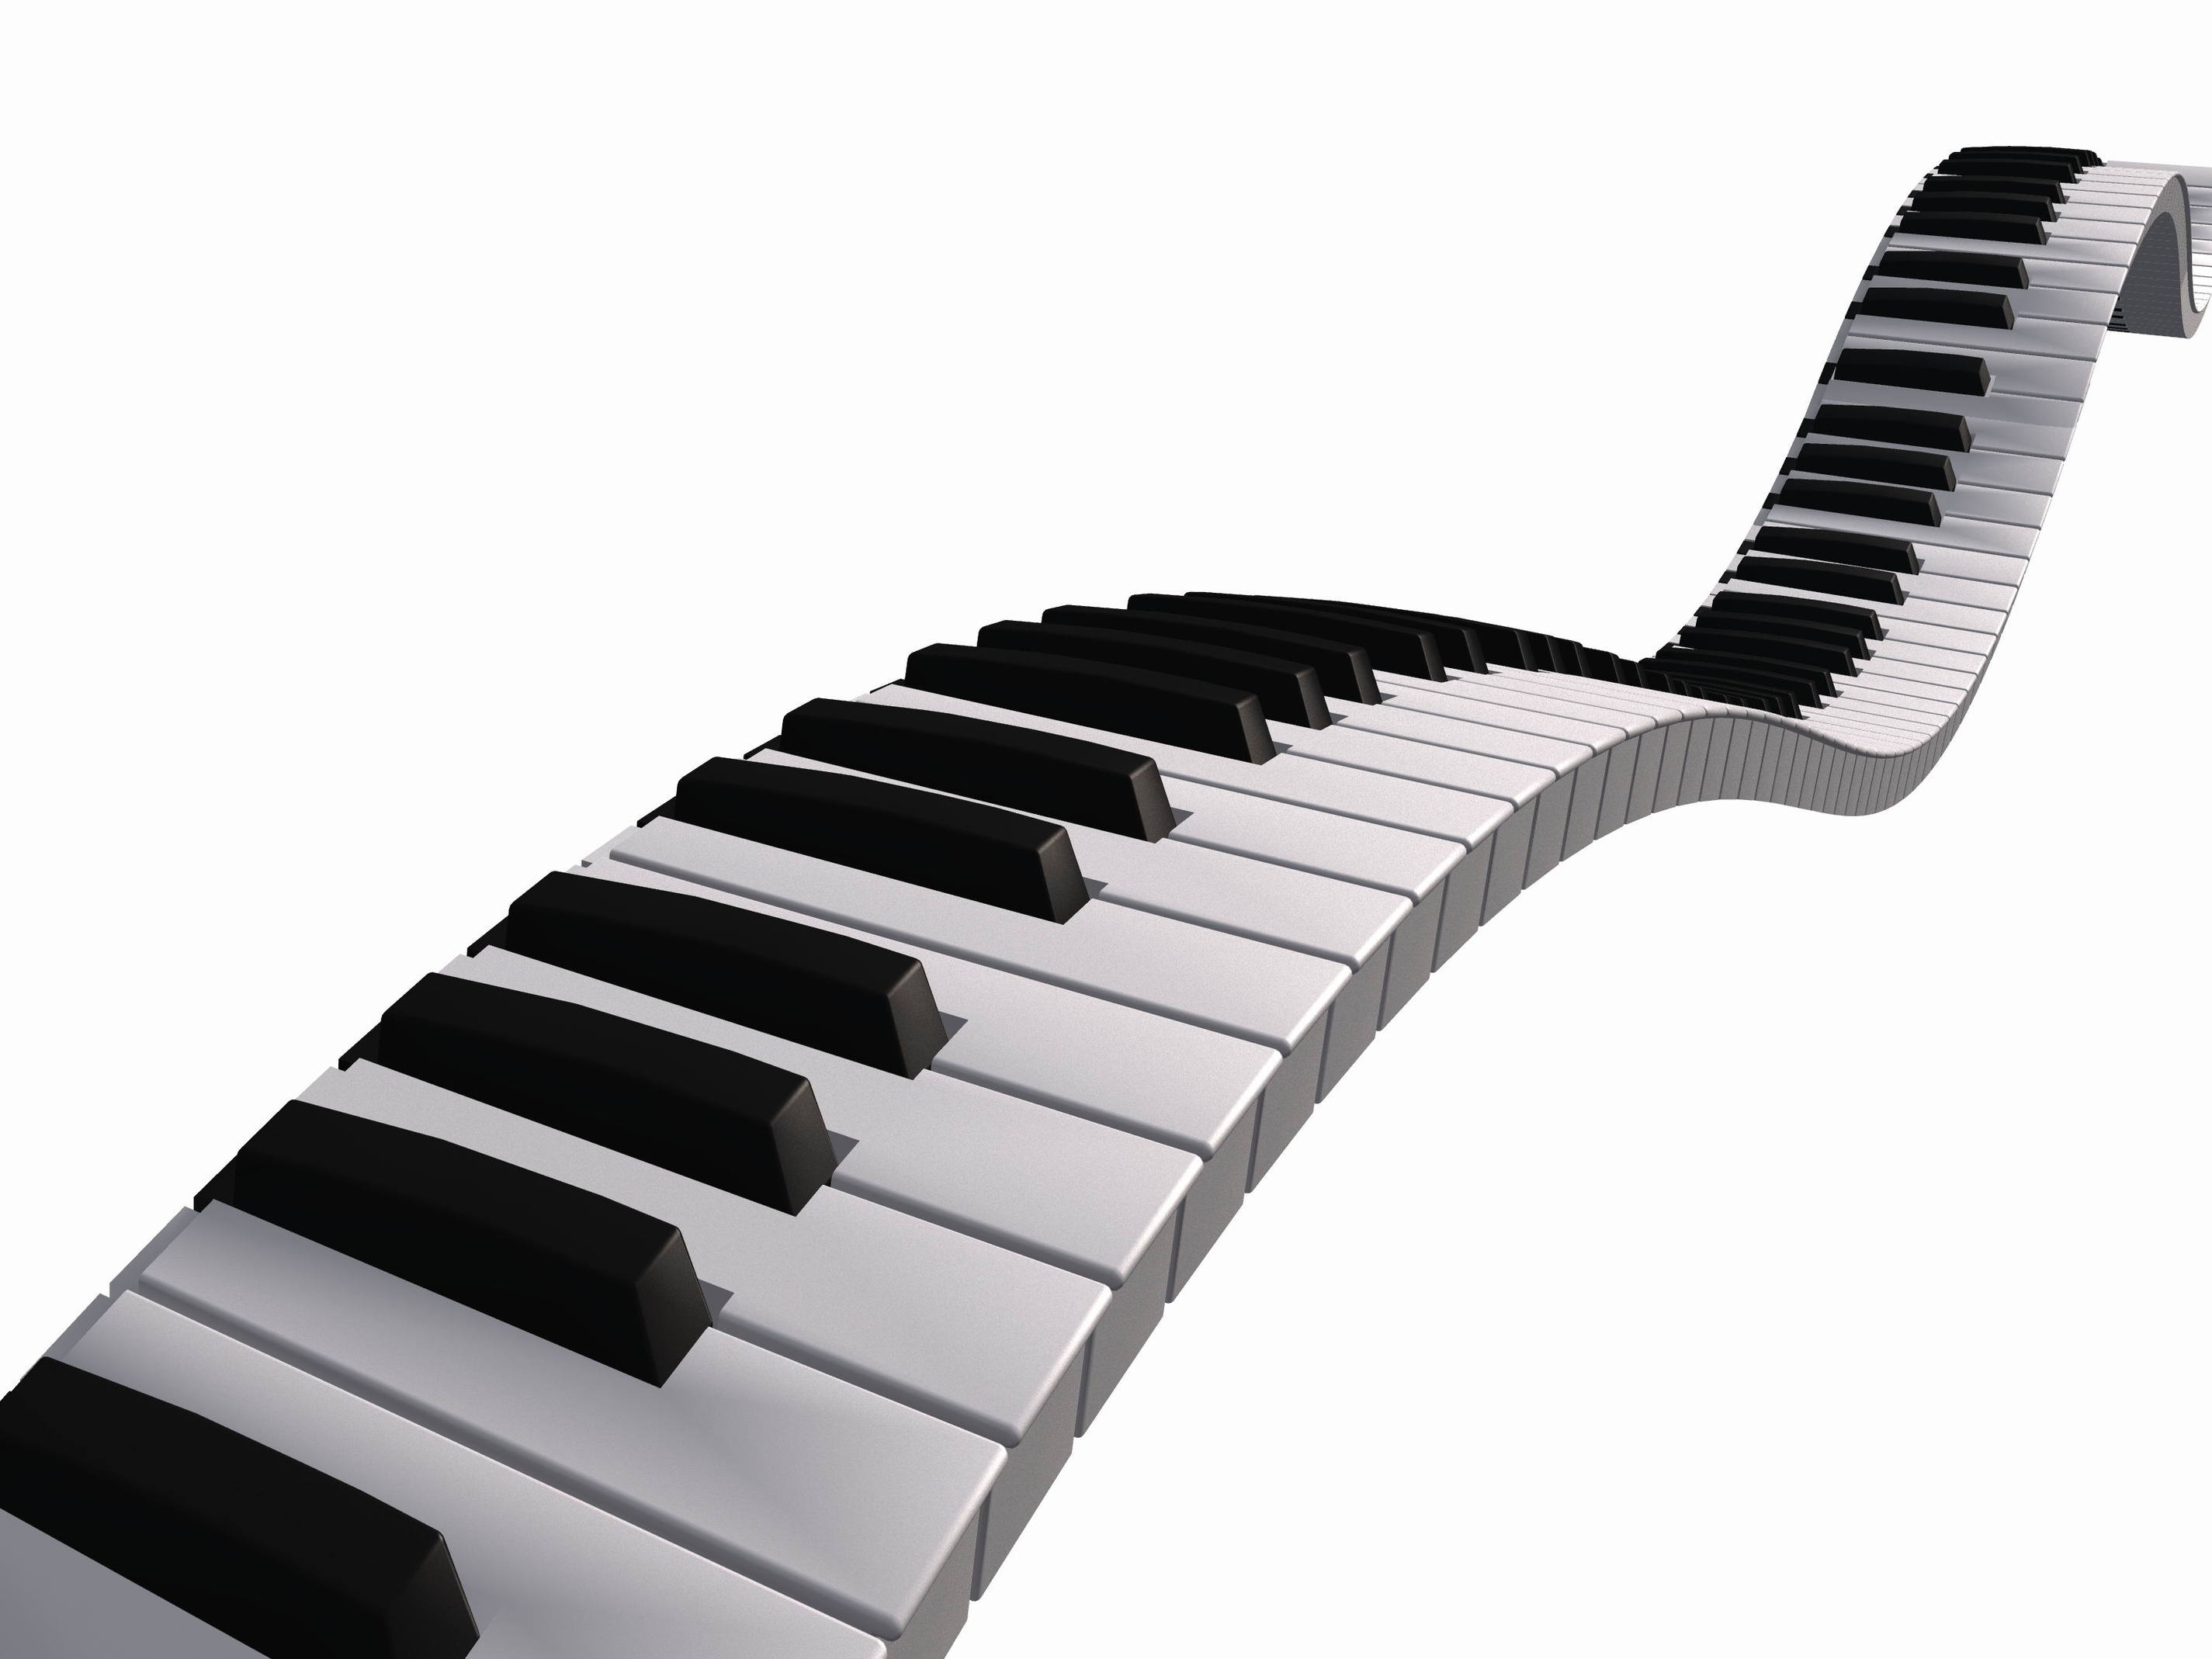 Piano keys clip art